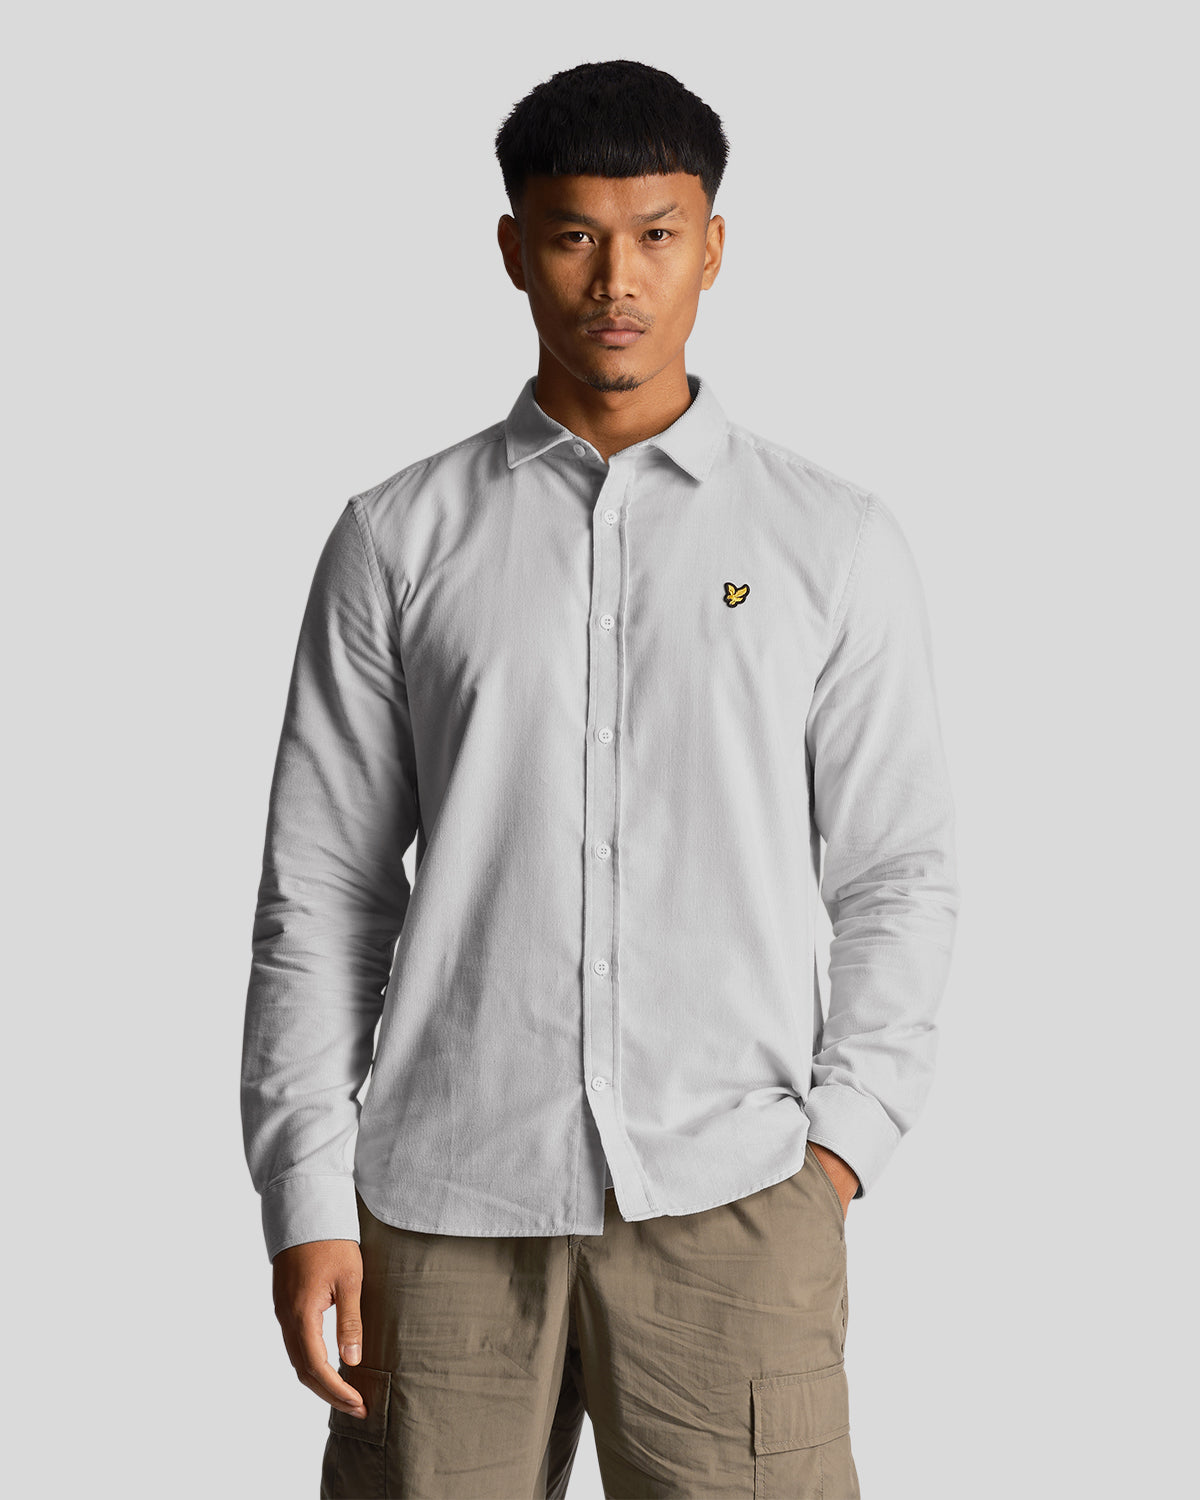 Lyle & Scott Mens Needle Cord Shirt in Grey - XXL product